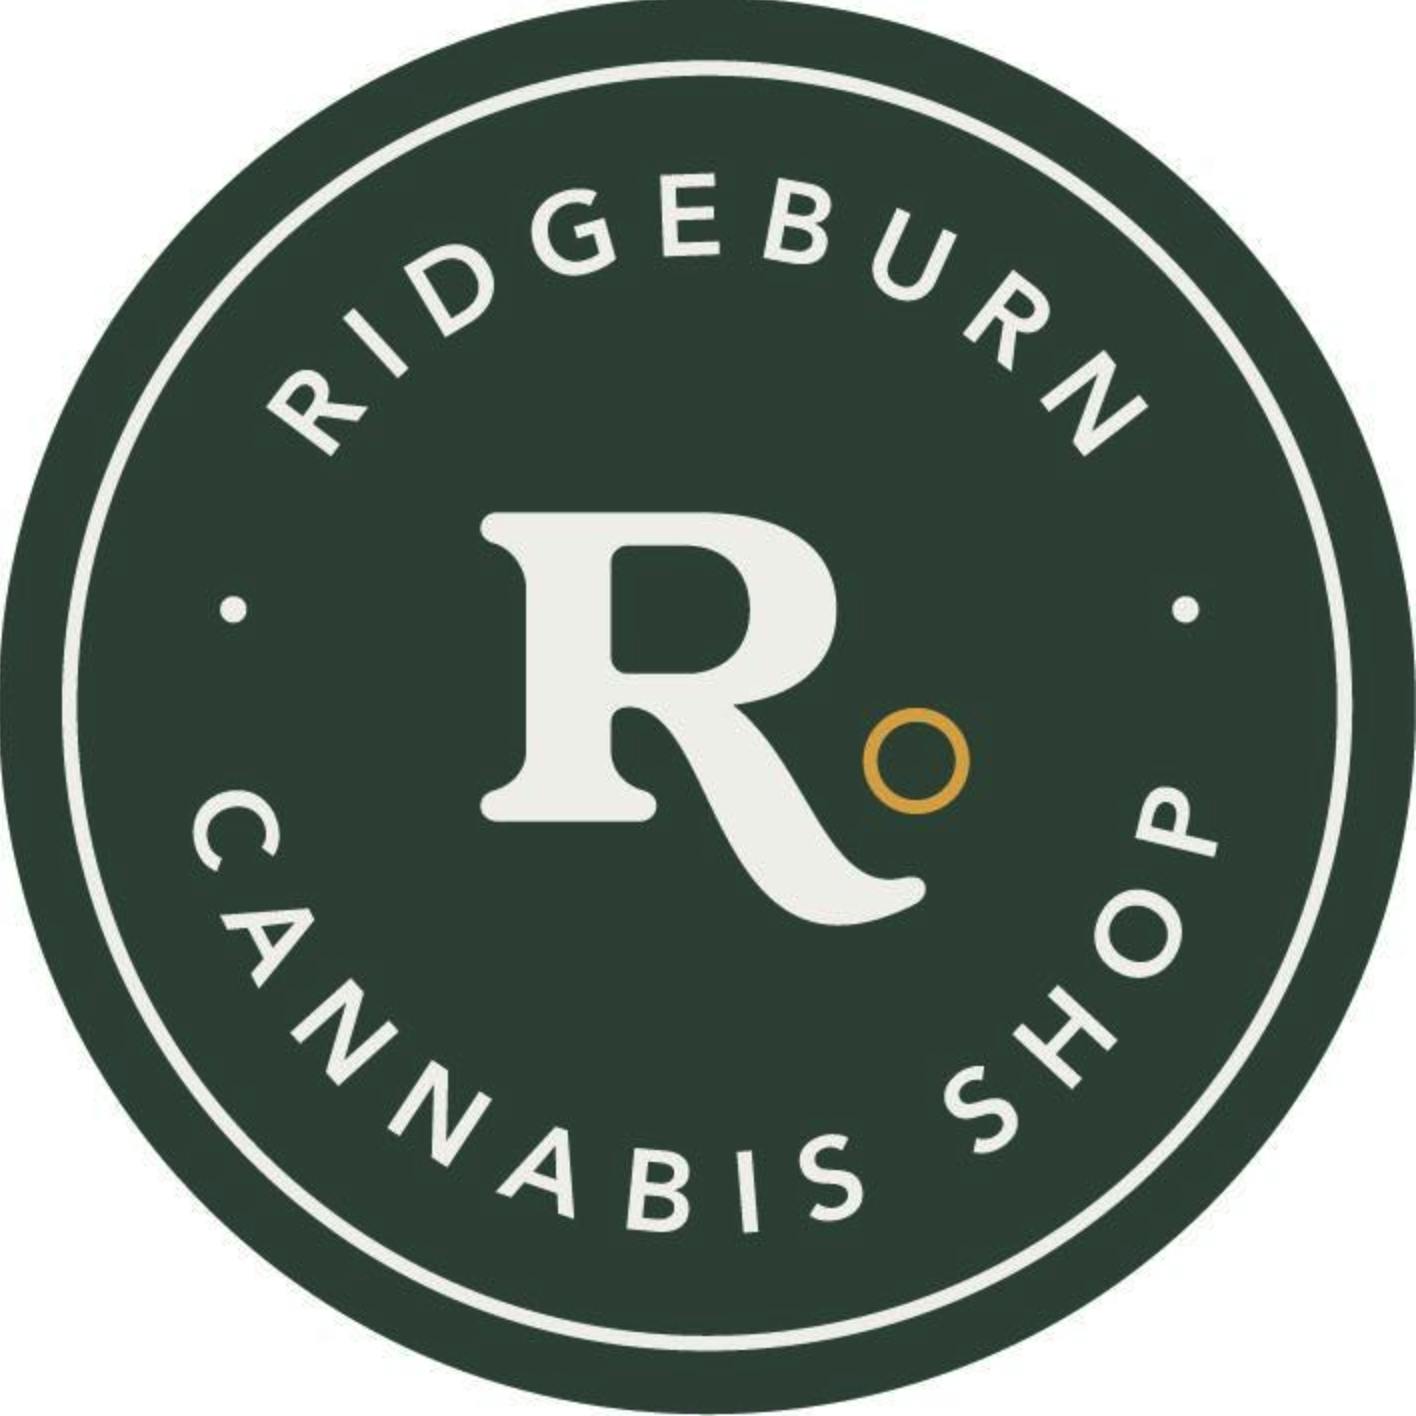 Ridgeburn Cannabis Shop logo